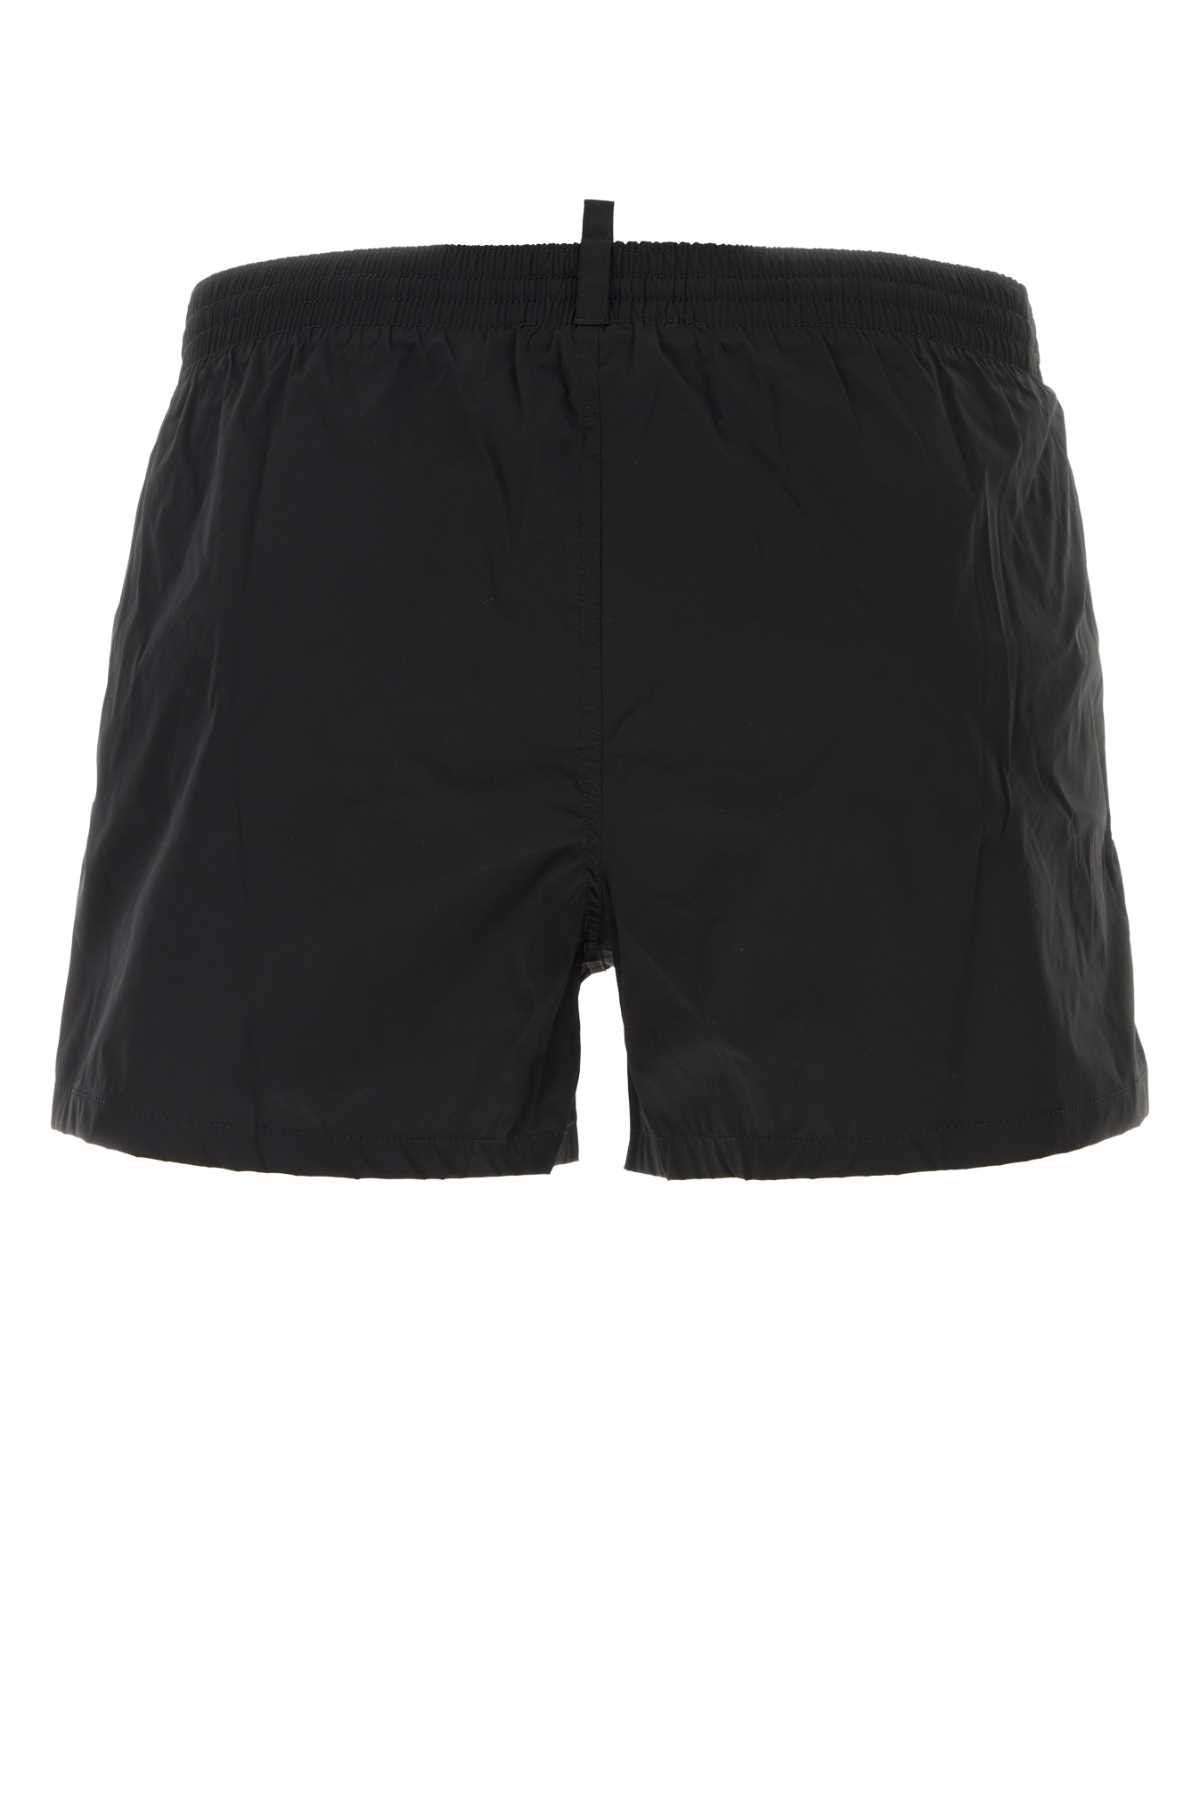 Dsquared2 Black Stretch Nylon Swimming Shorts